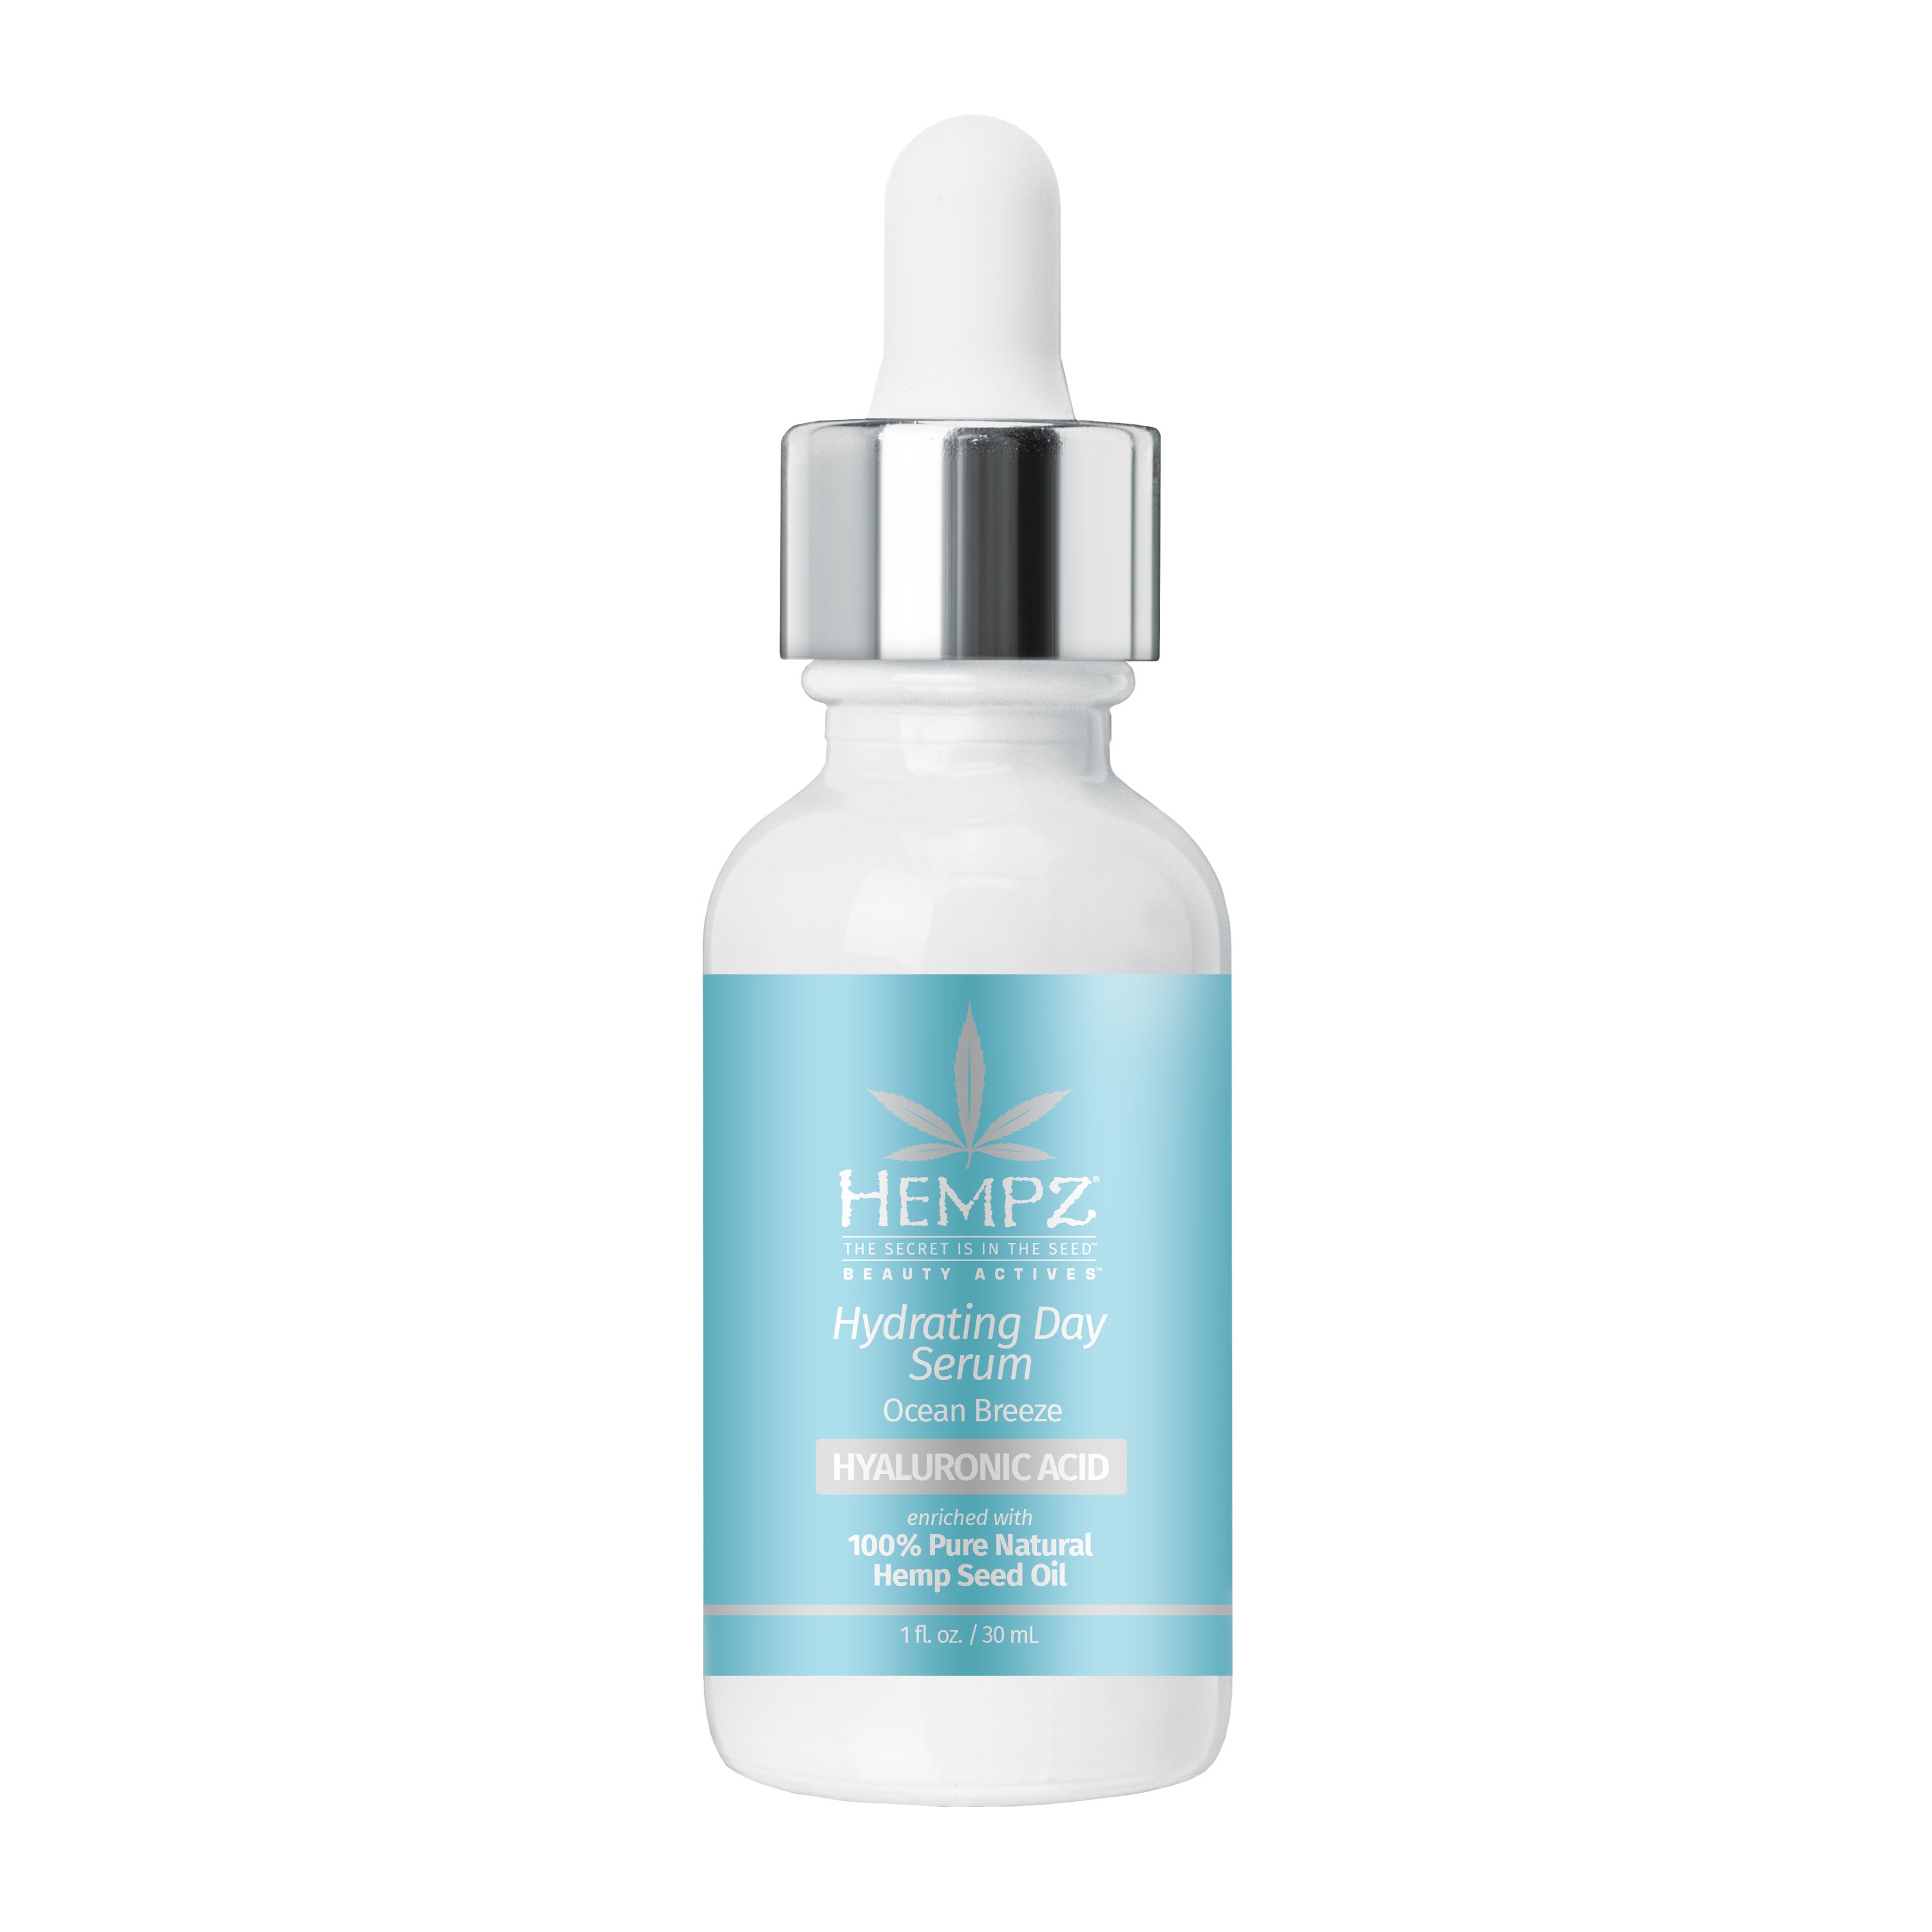 Hempz - Ocean Breeze Hydrating Day Serum 1 oz. - Creata Beauty - Professional Beauty Products